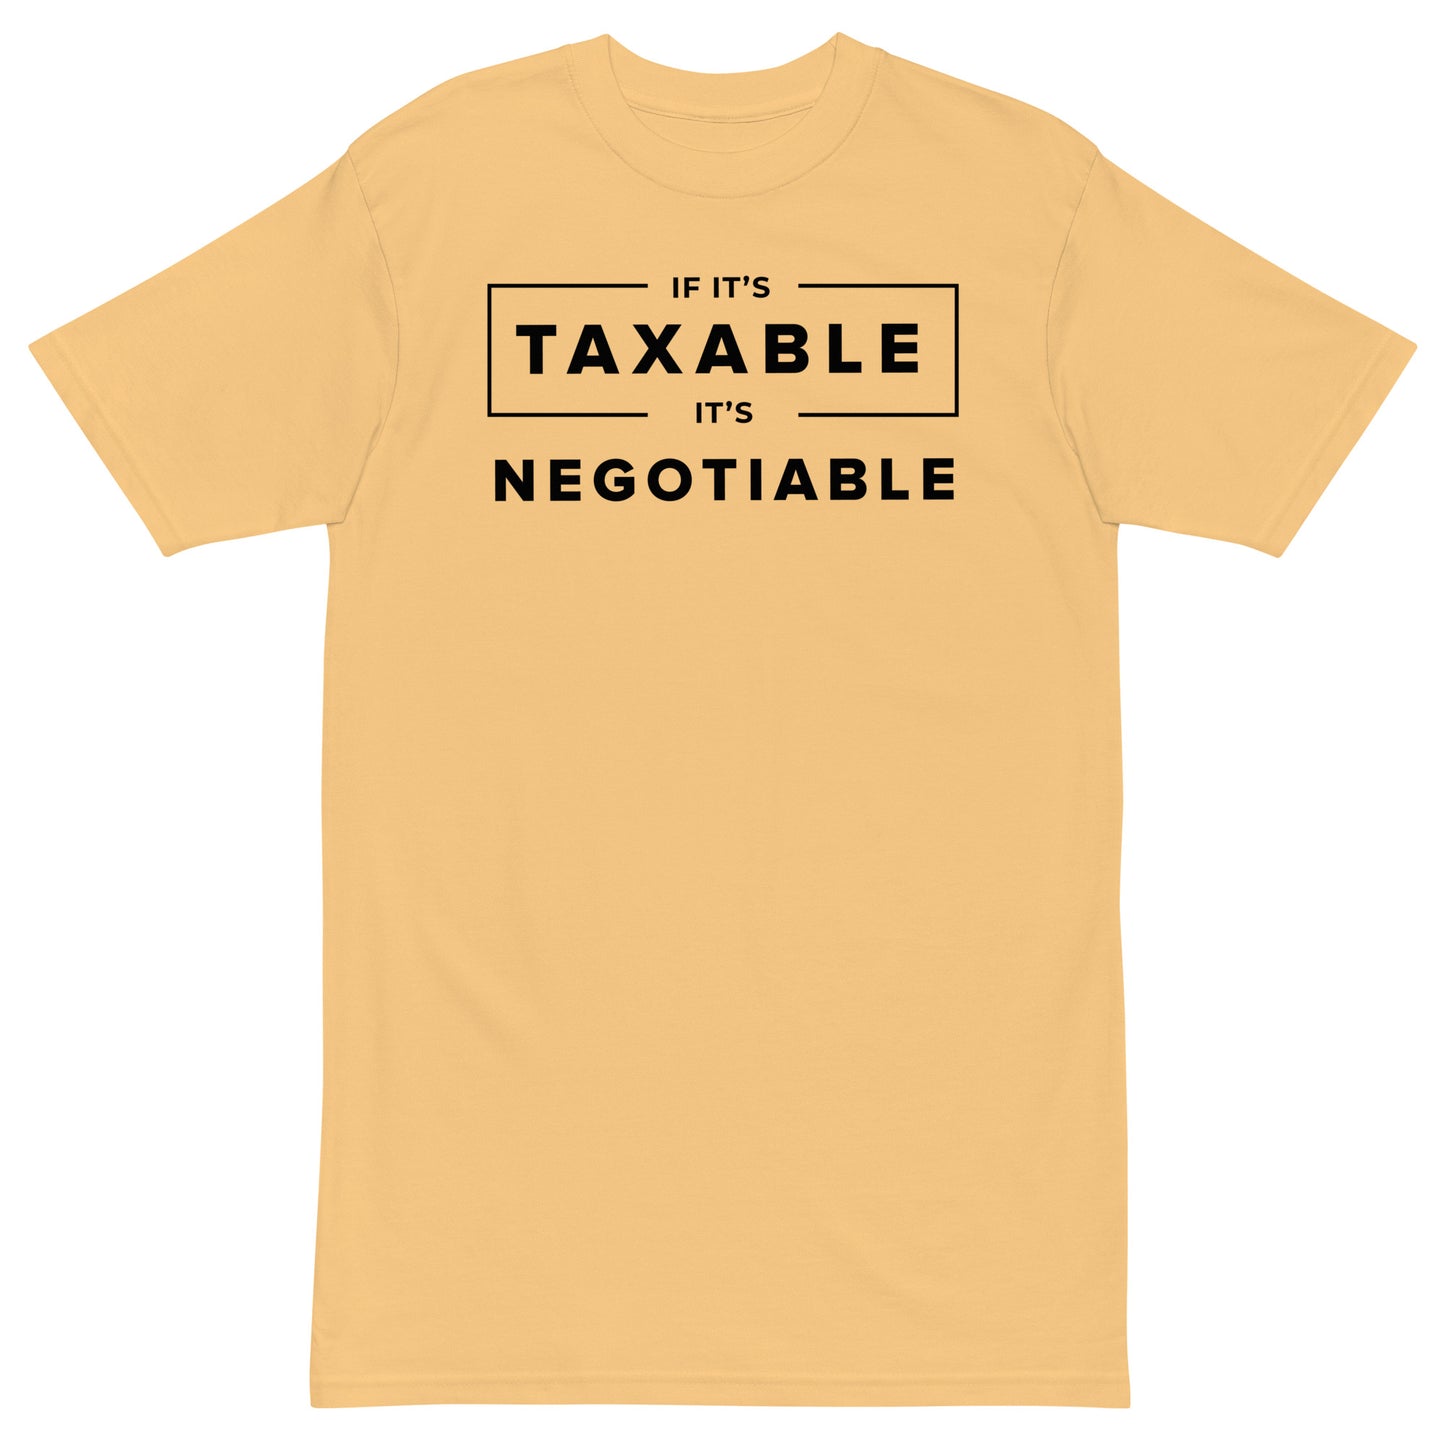 If it's taxable, it's negotiable - original - dark